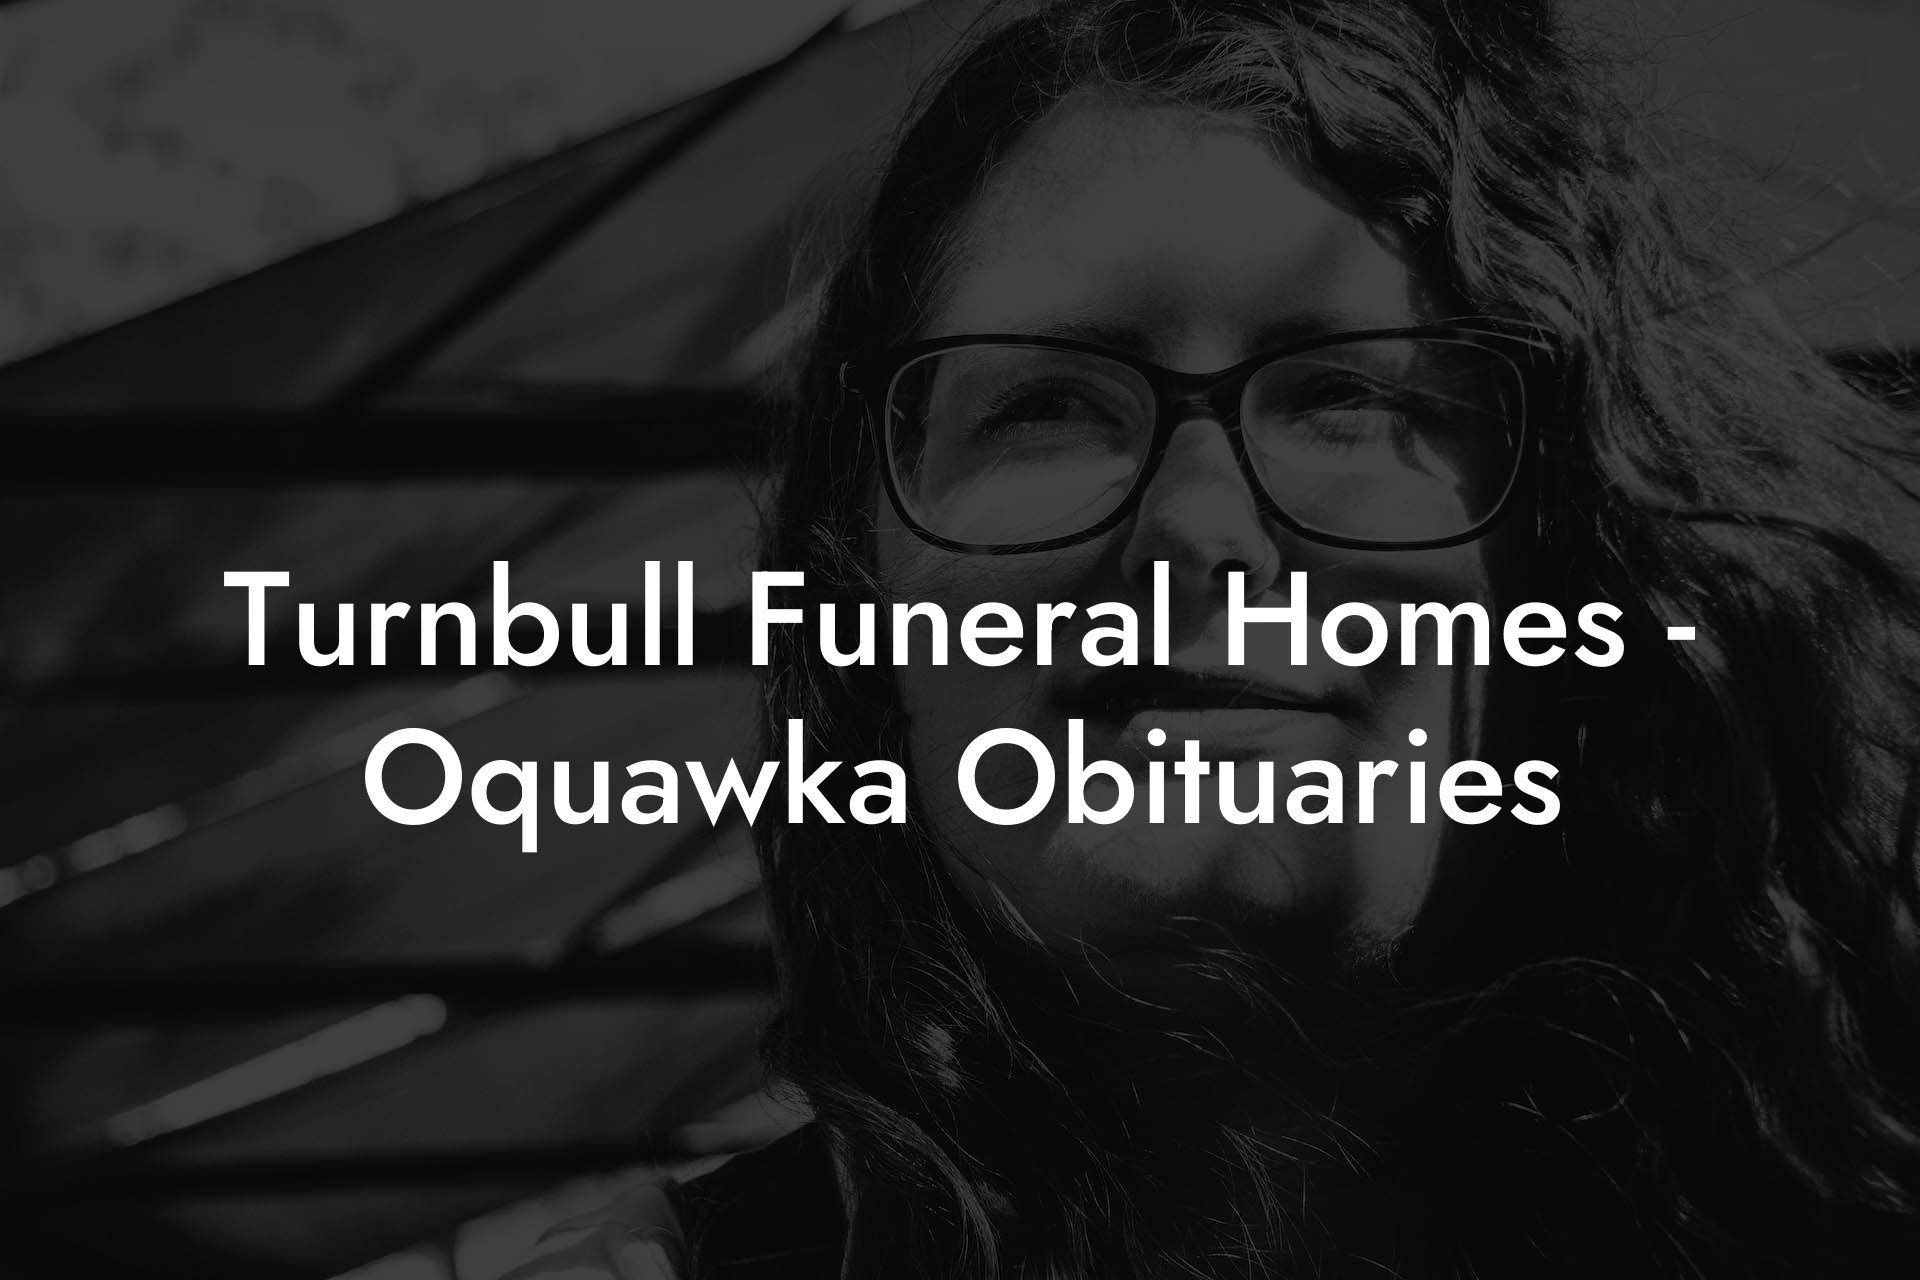 Turnbull Funeral Homes - Oquawka Obituaries